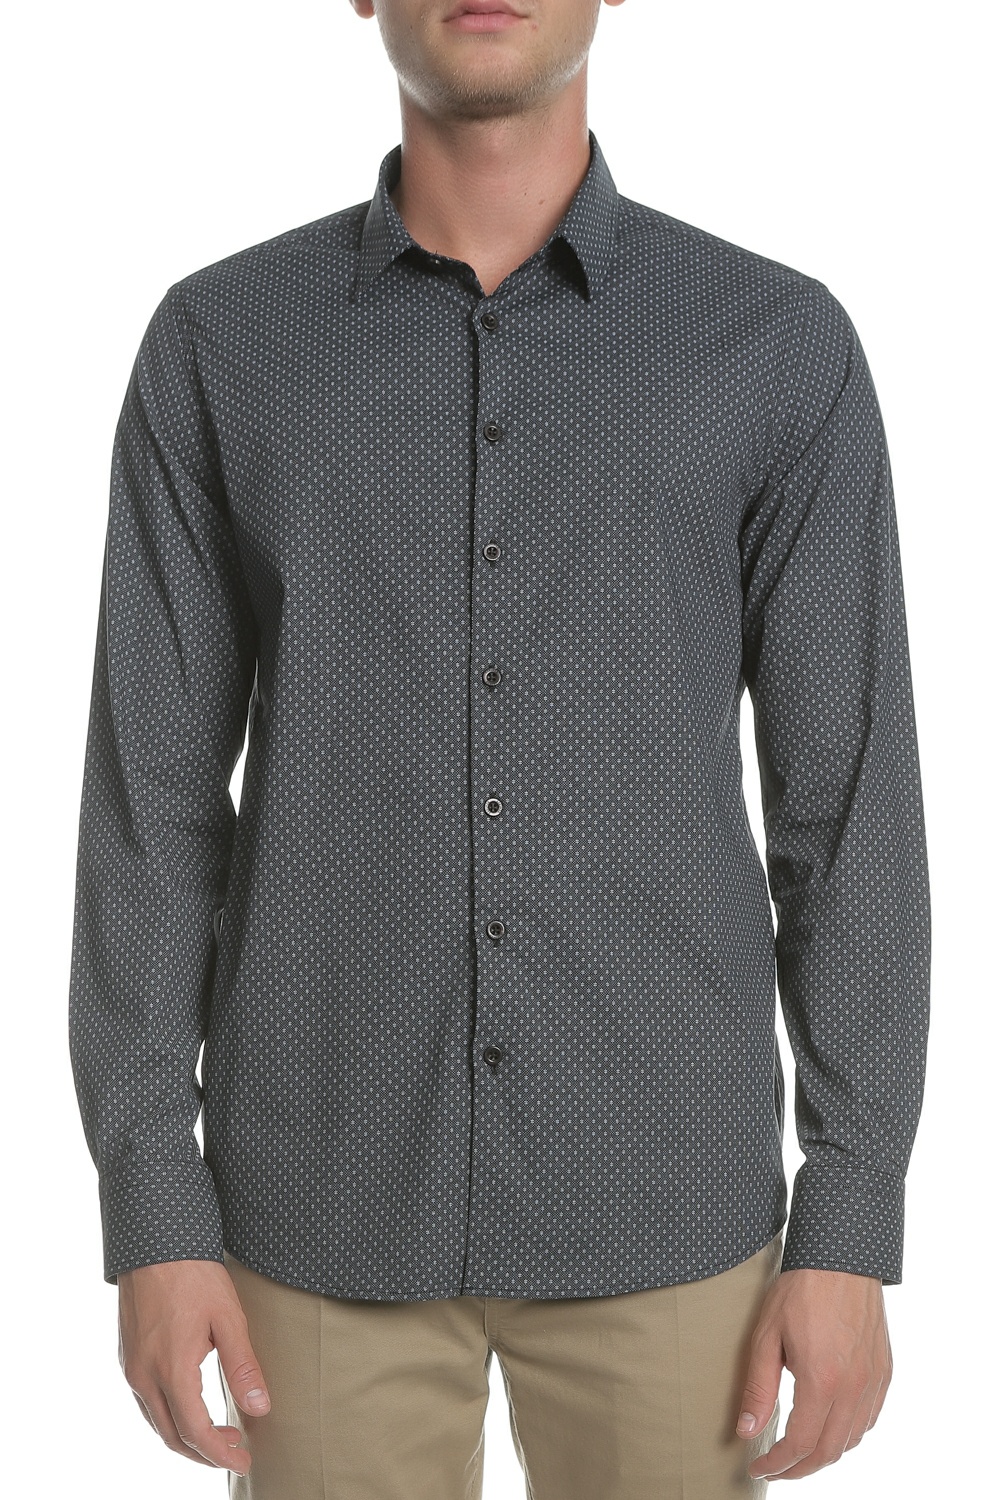 SSEINSE - Ανδρικό πουκάμισο SSEINSE ανθρακί Ανδρικά/Ρούχα/Πουκάμισα/Μακρυμάνικα